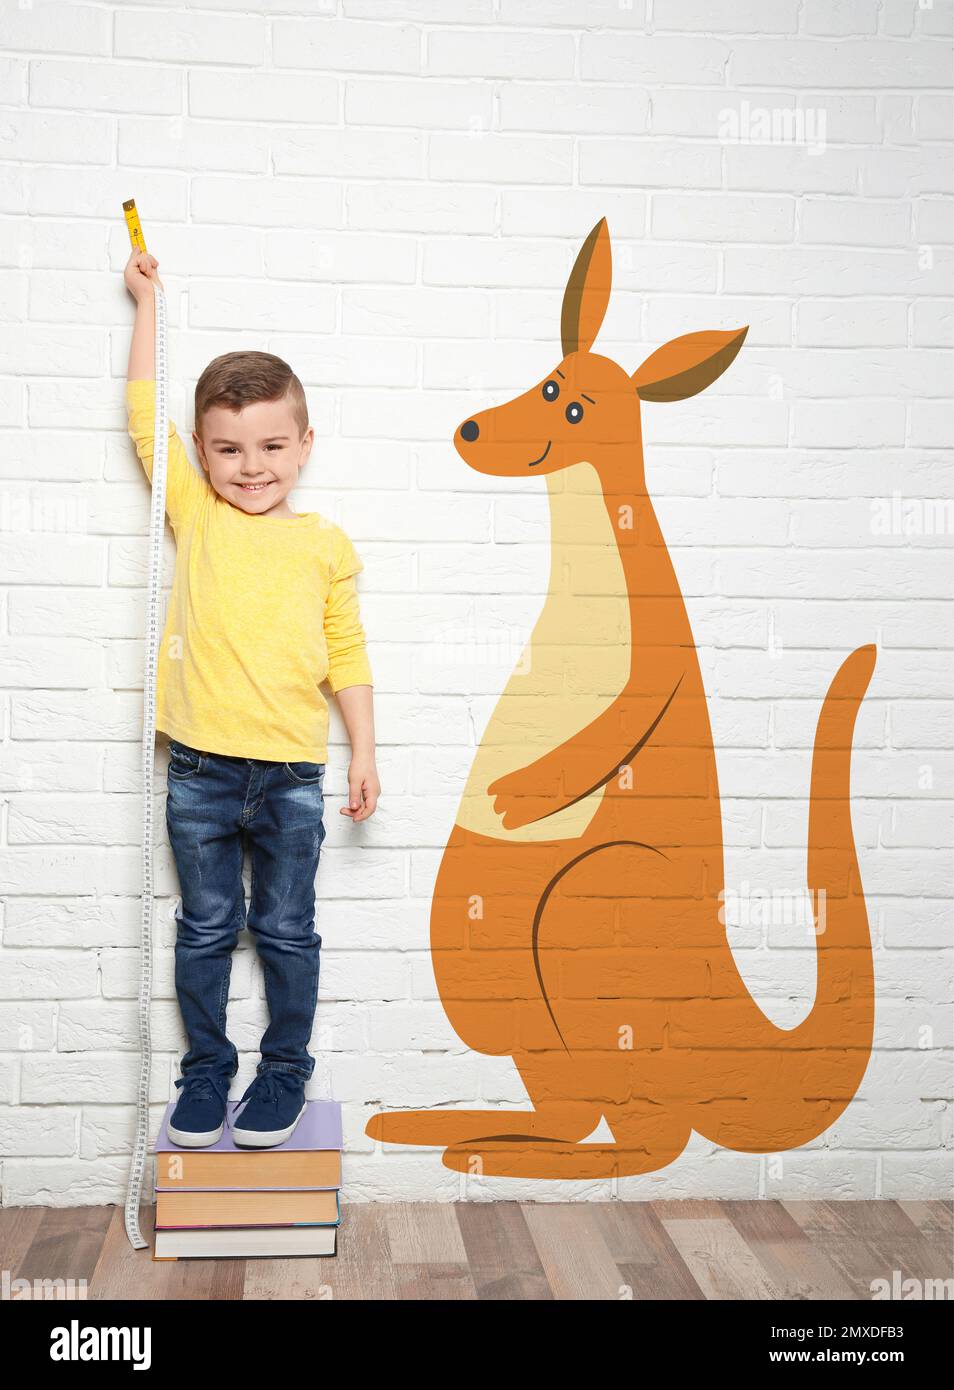 Little boy measuring height and drawing of kangaroo near white brick wall Stock Photo